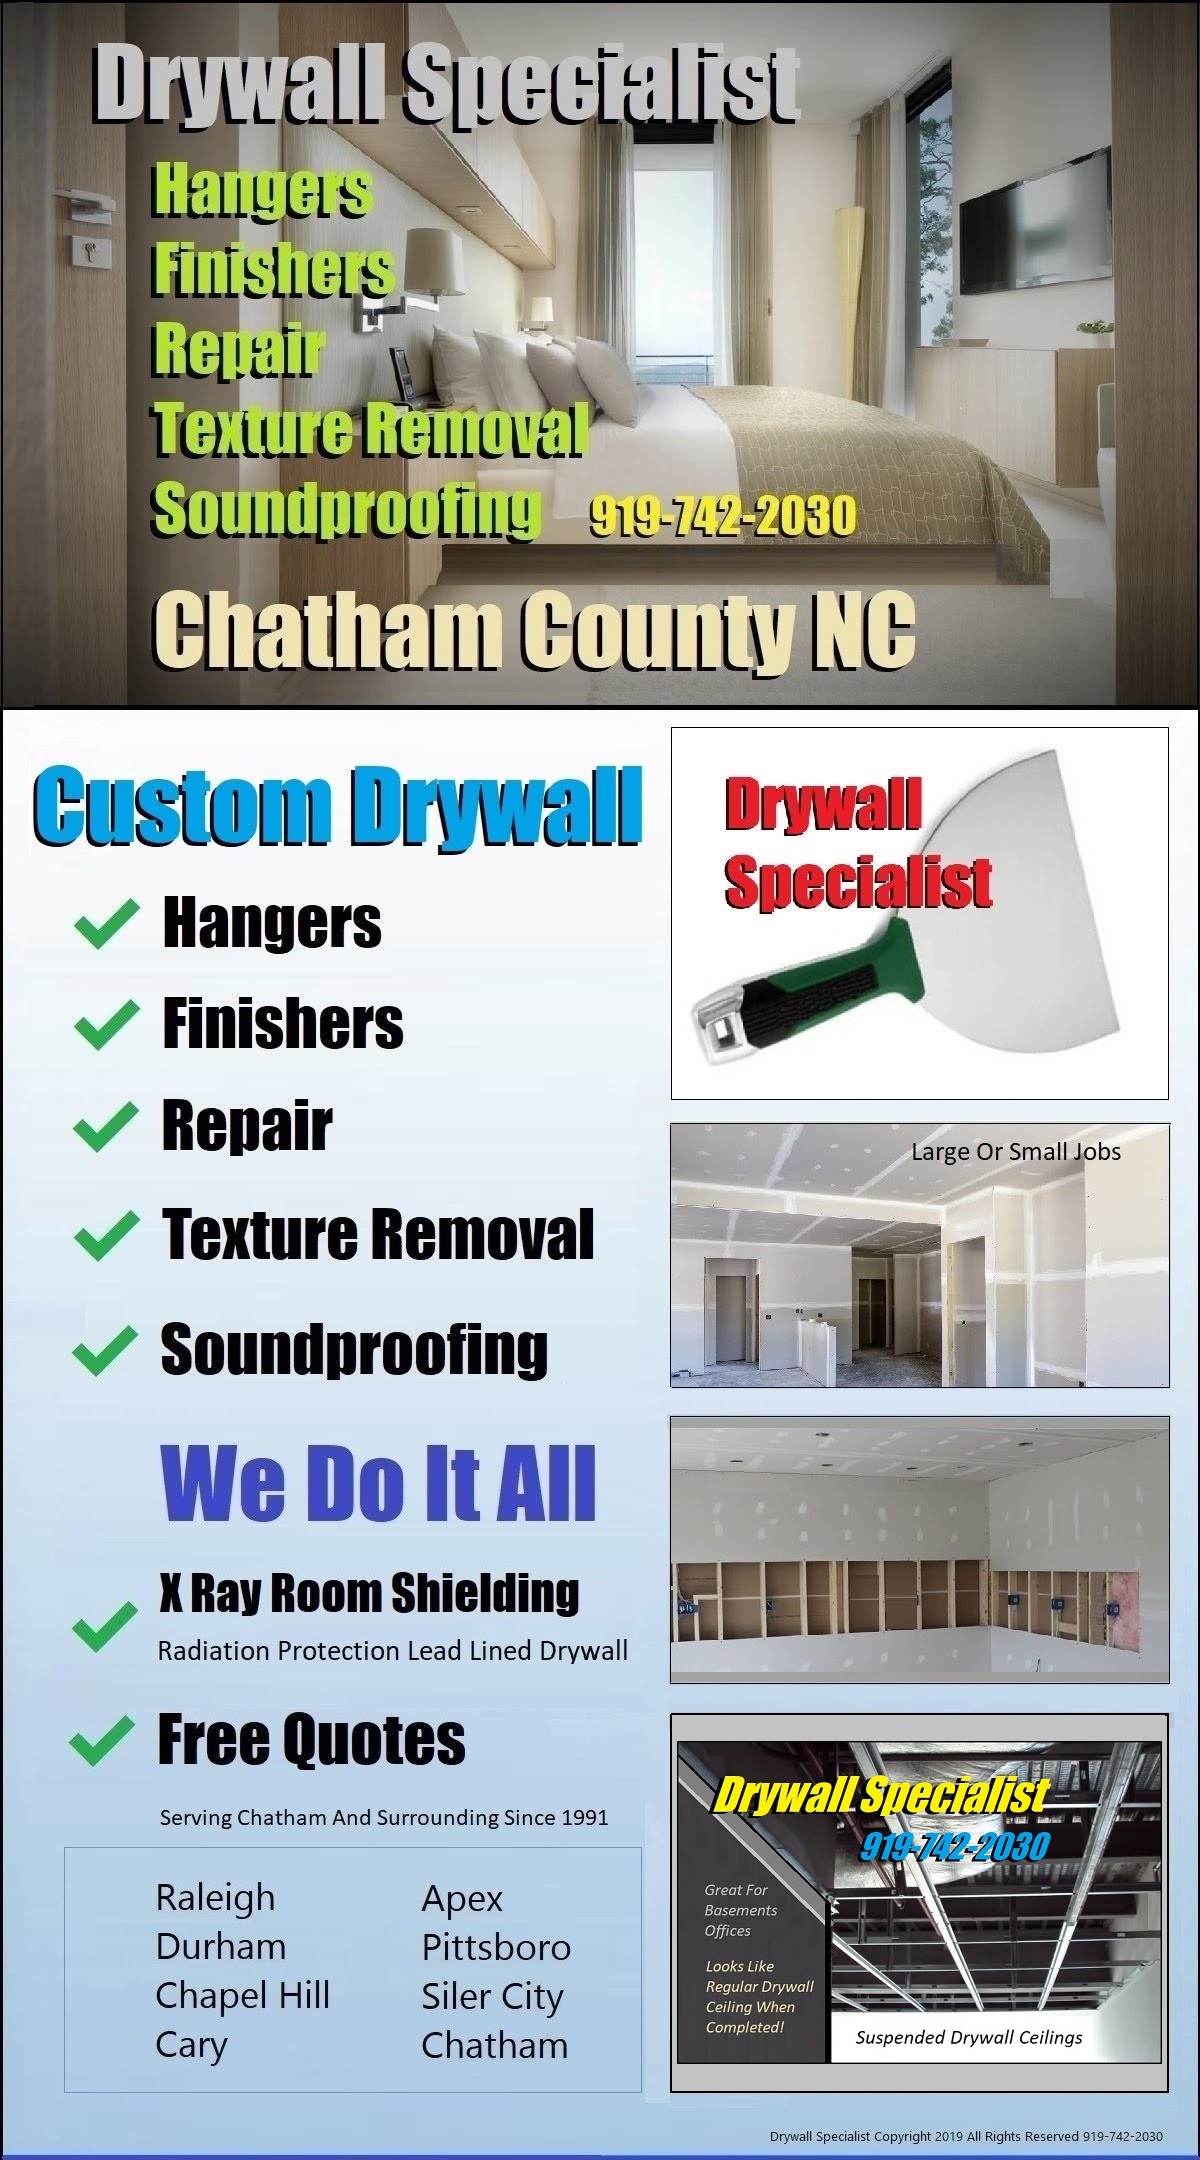 Nextdoor Wallboard Hanger Finisher Repair And Popcorn Texture Removal Soundproofing Companyr | North Carolina